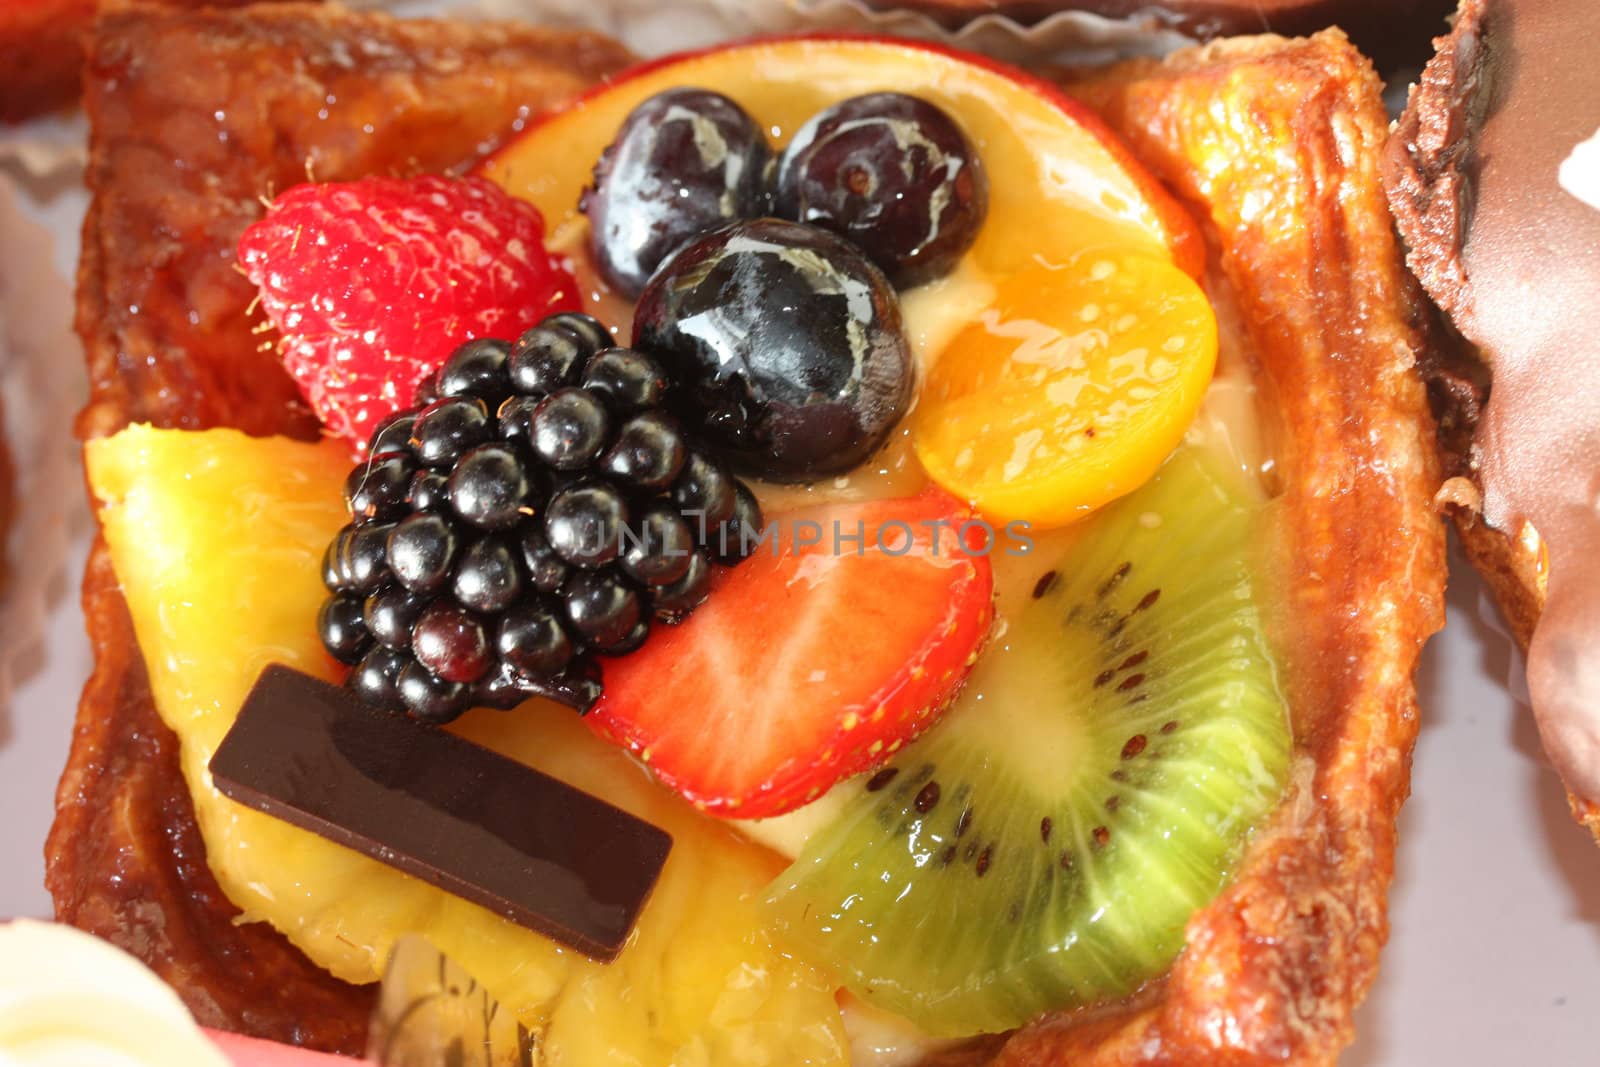 Fruit pastry with fresh strawberry, grapes, mango and kiwi